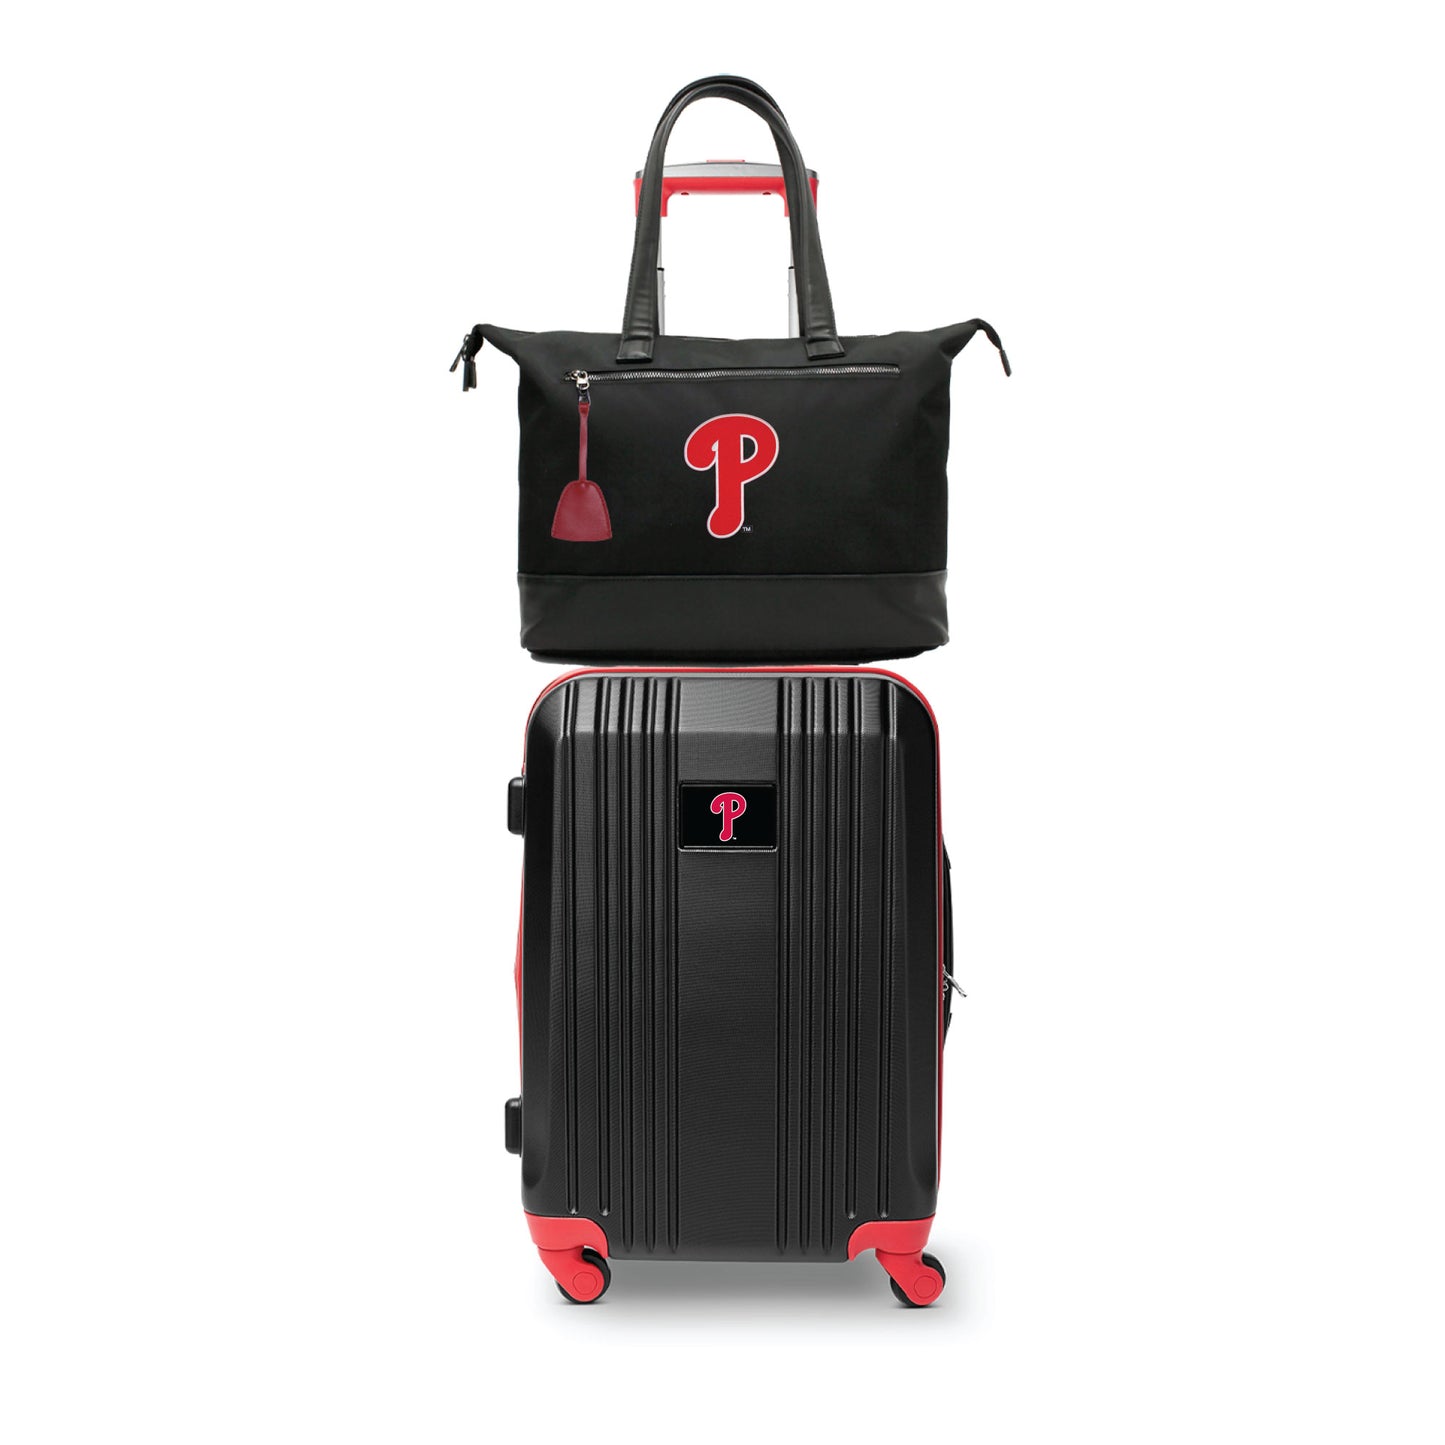 Philadelphia Phillies Premium Laptop Tote Bag and Luggage Set